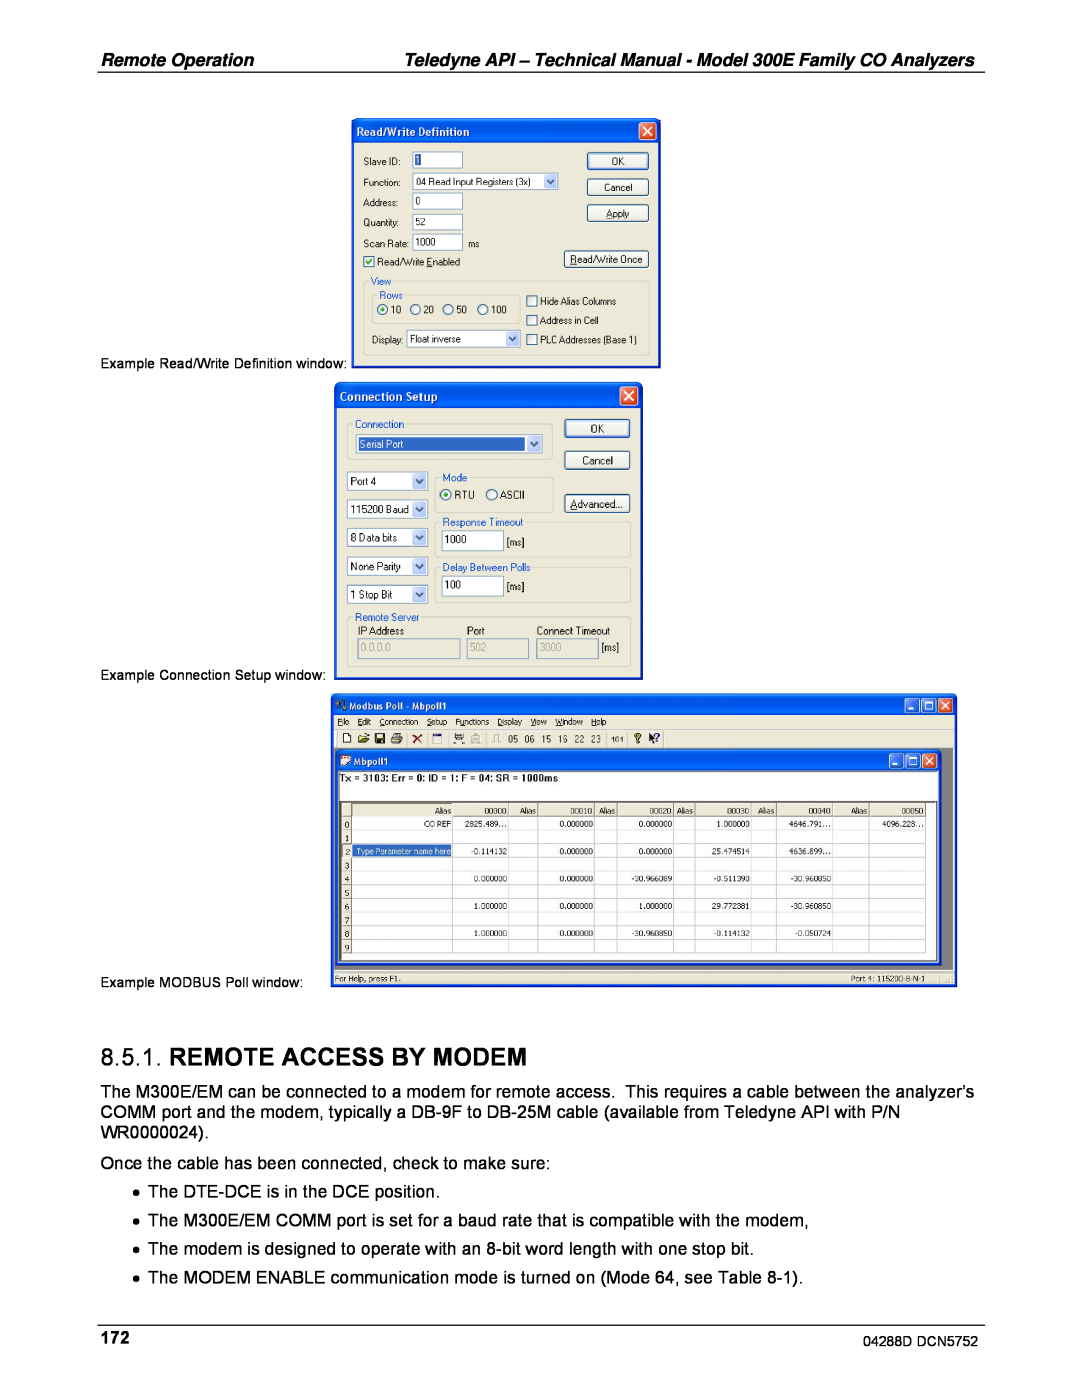 Teledyne M300EM operation manual Remote Access By Modem 